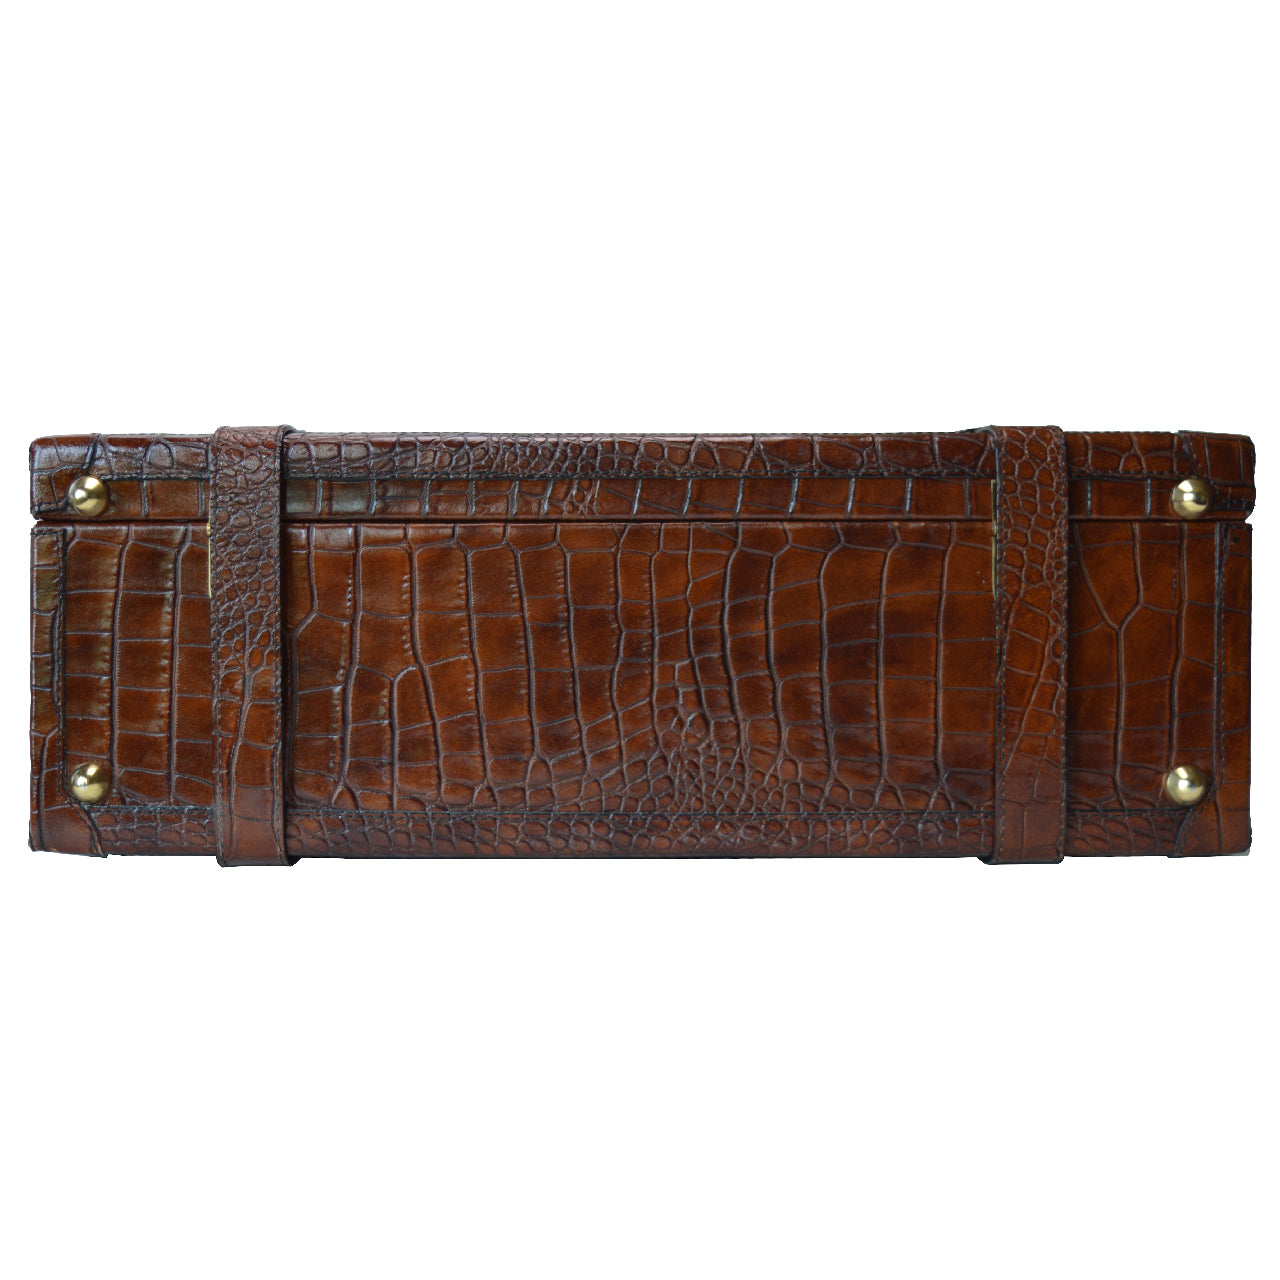 Pratesi Diligenza Travel Bag in genuine Italian leather